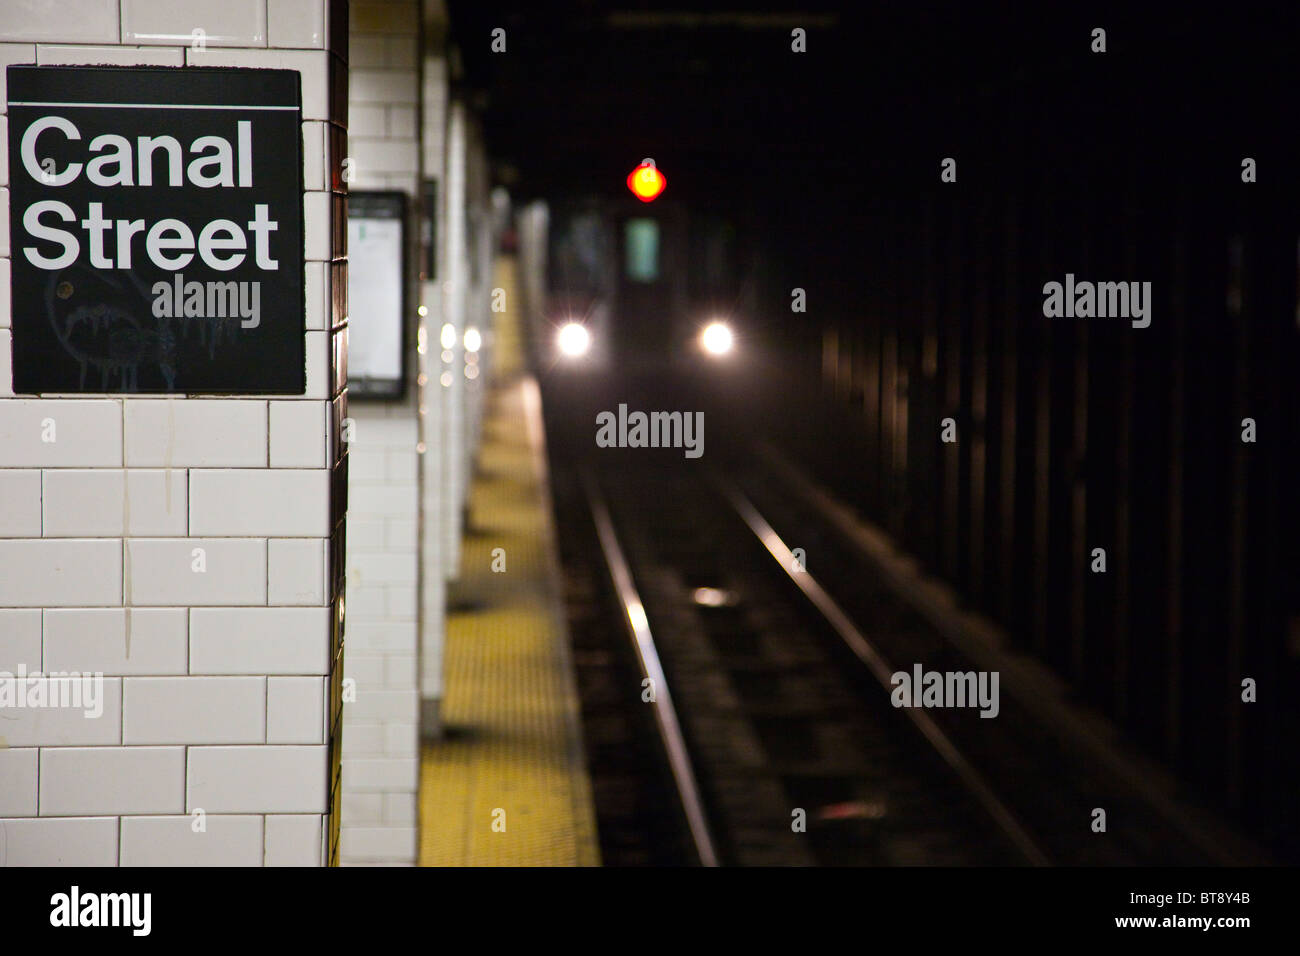 Canal Street Subway Station Platform, Manhattan, New York City Stock Photo